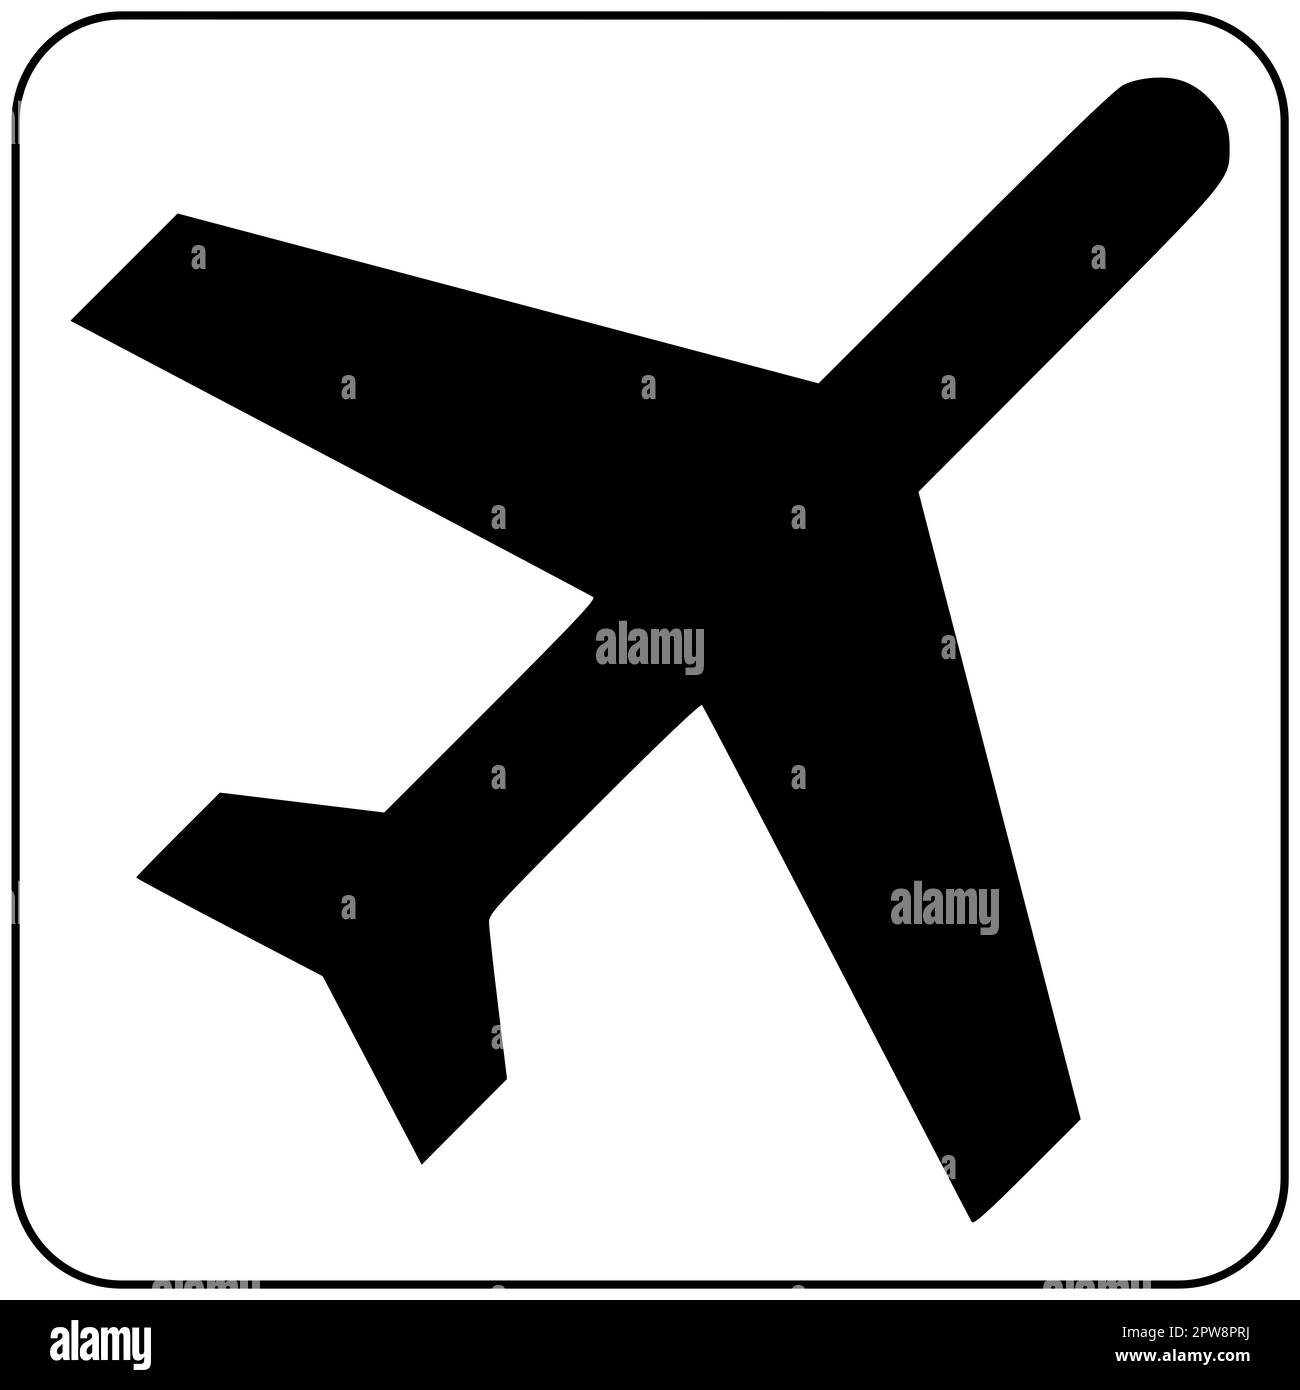 Department of Transportation flight departures pictogram Stock Photo